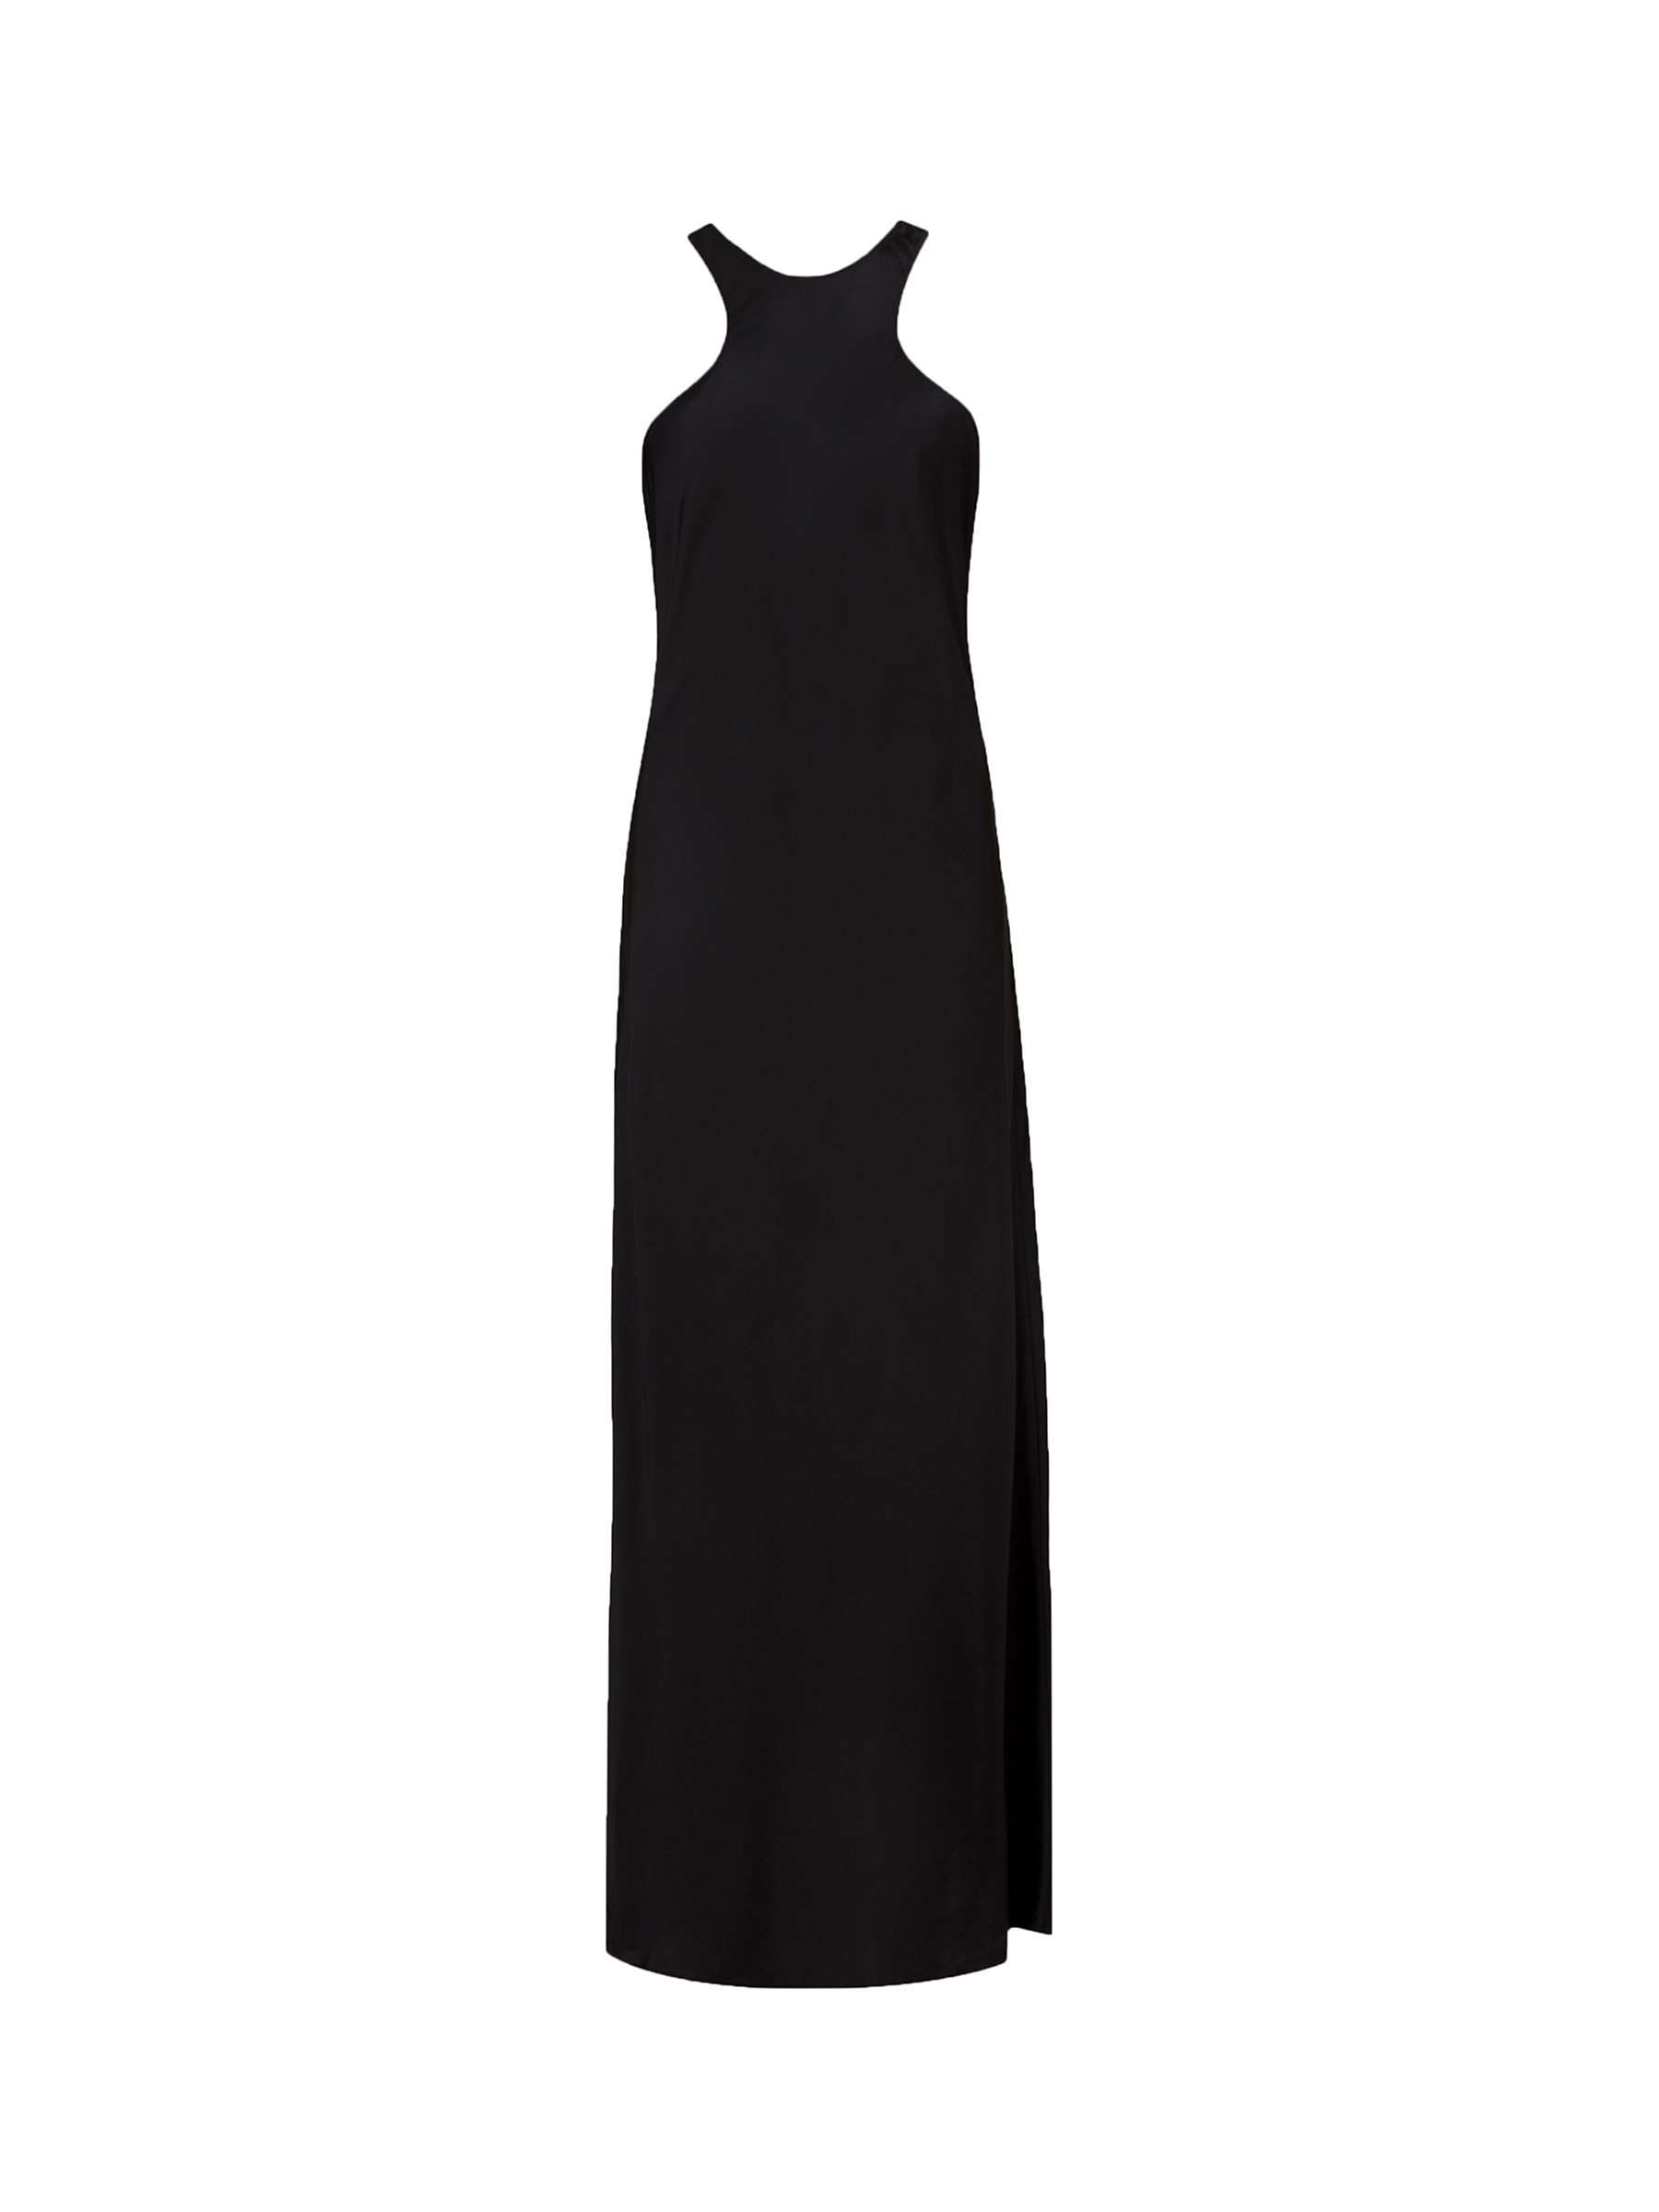 AllSaints Betina Sleeveless Midi Dress, Black at John Lewis & Partners